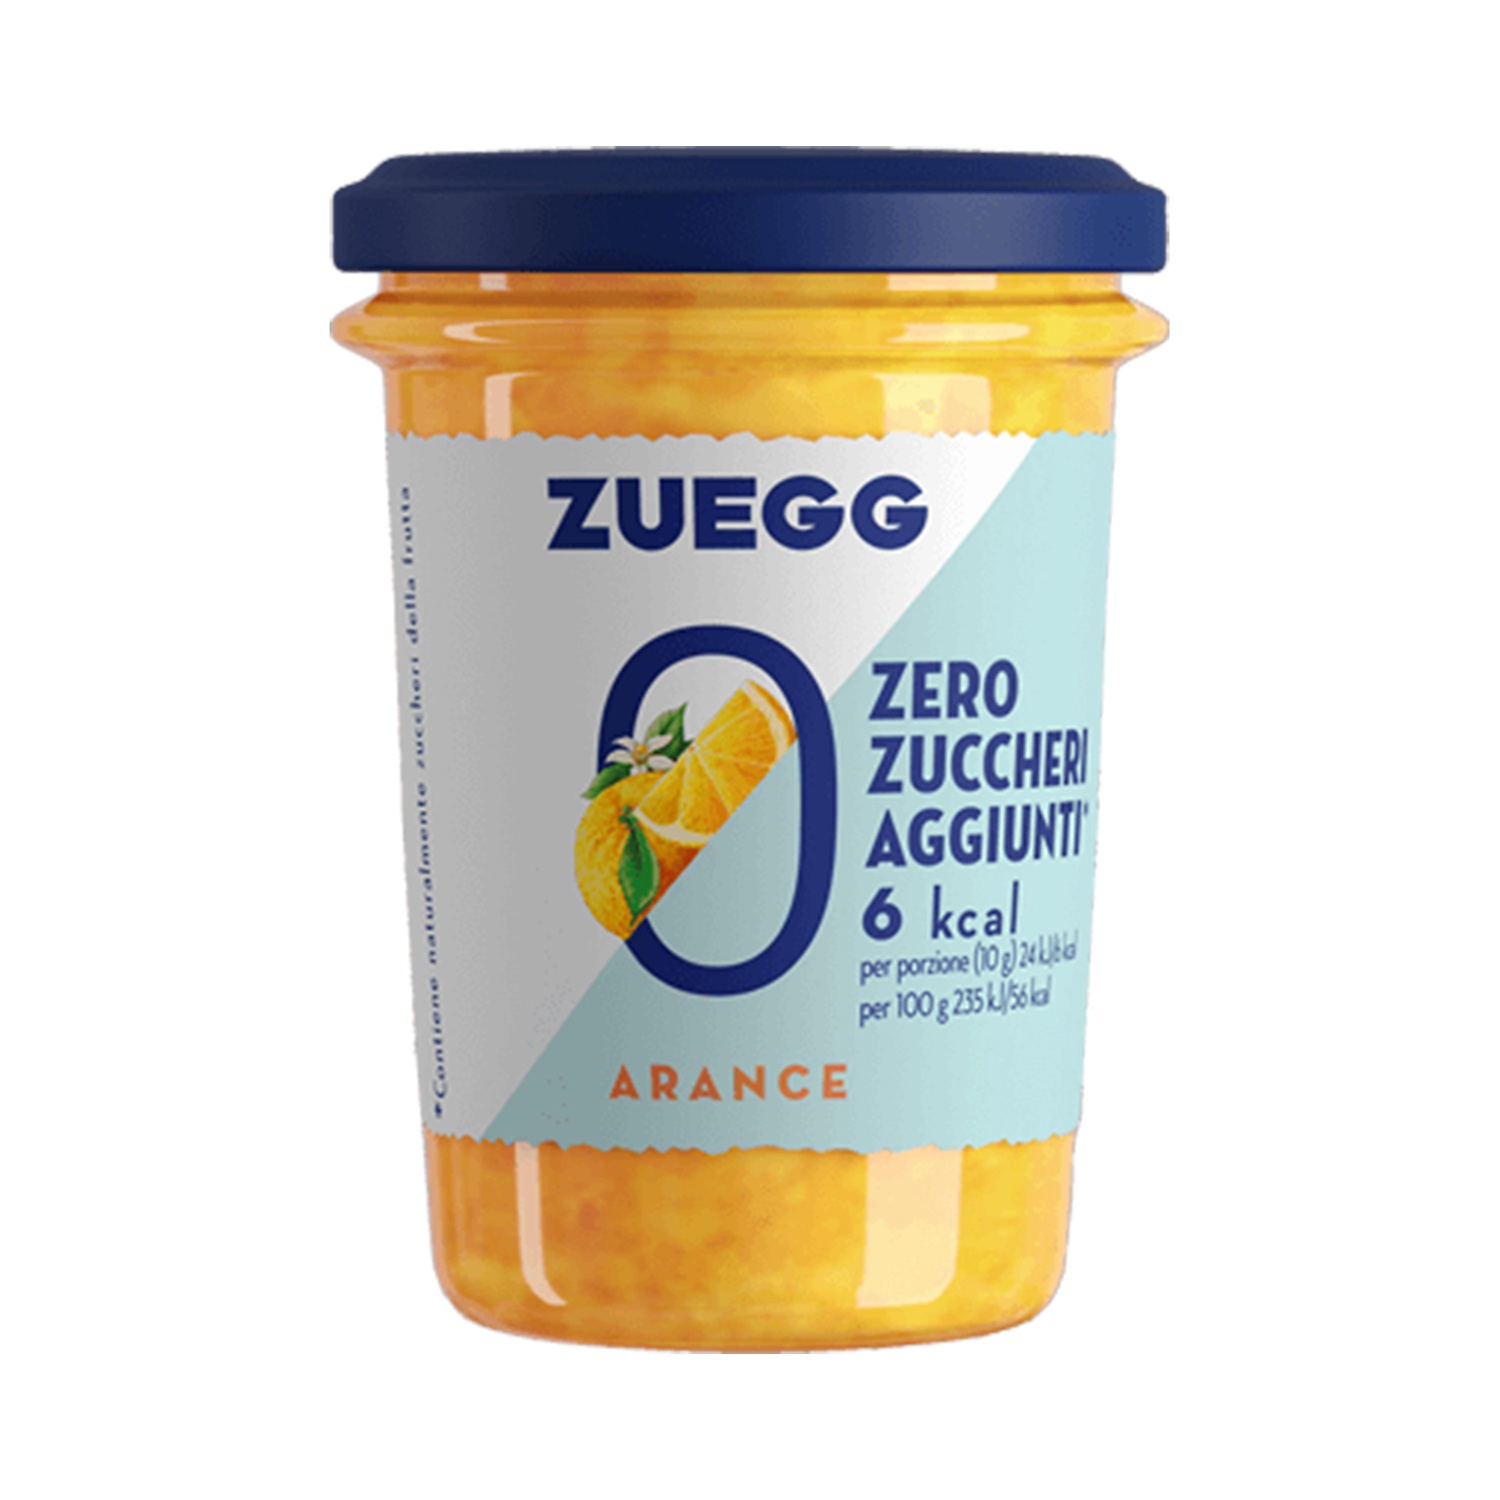 ZUEGG Zero Zuccheri aggiunti alle arance